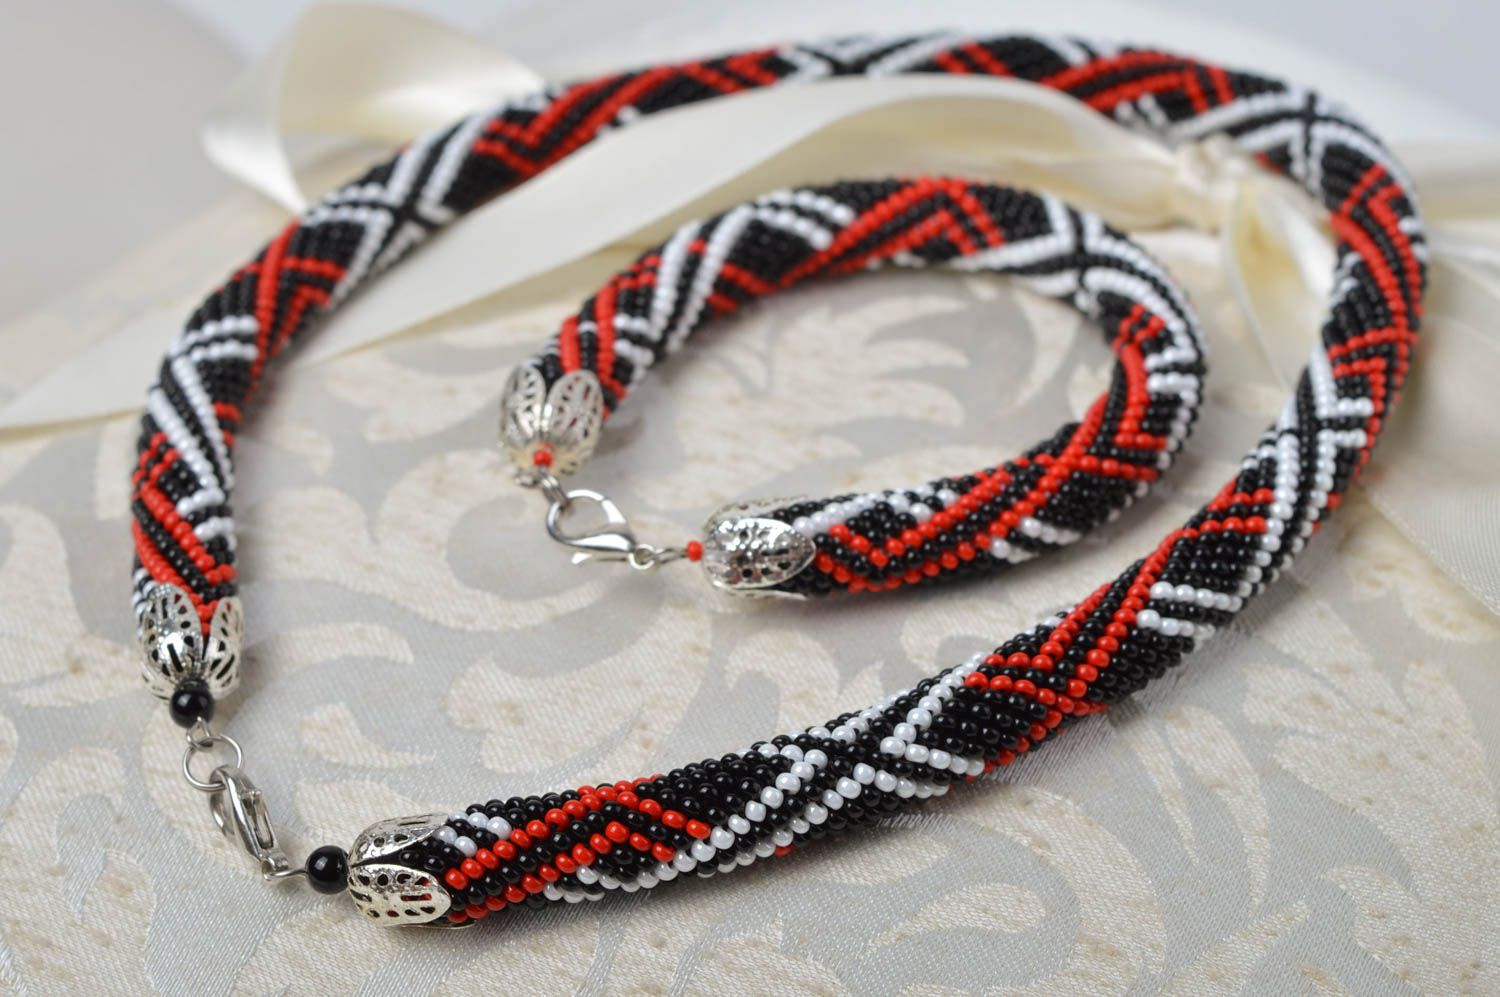 Handmade beaded cord necklace beaded cord bracelet designs jewelry set 2 pieces photo 1